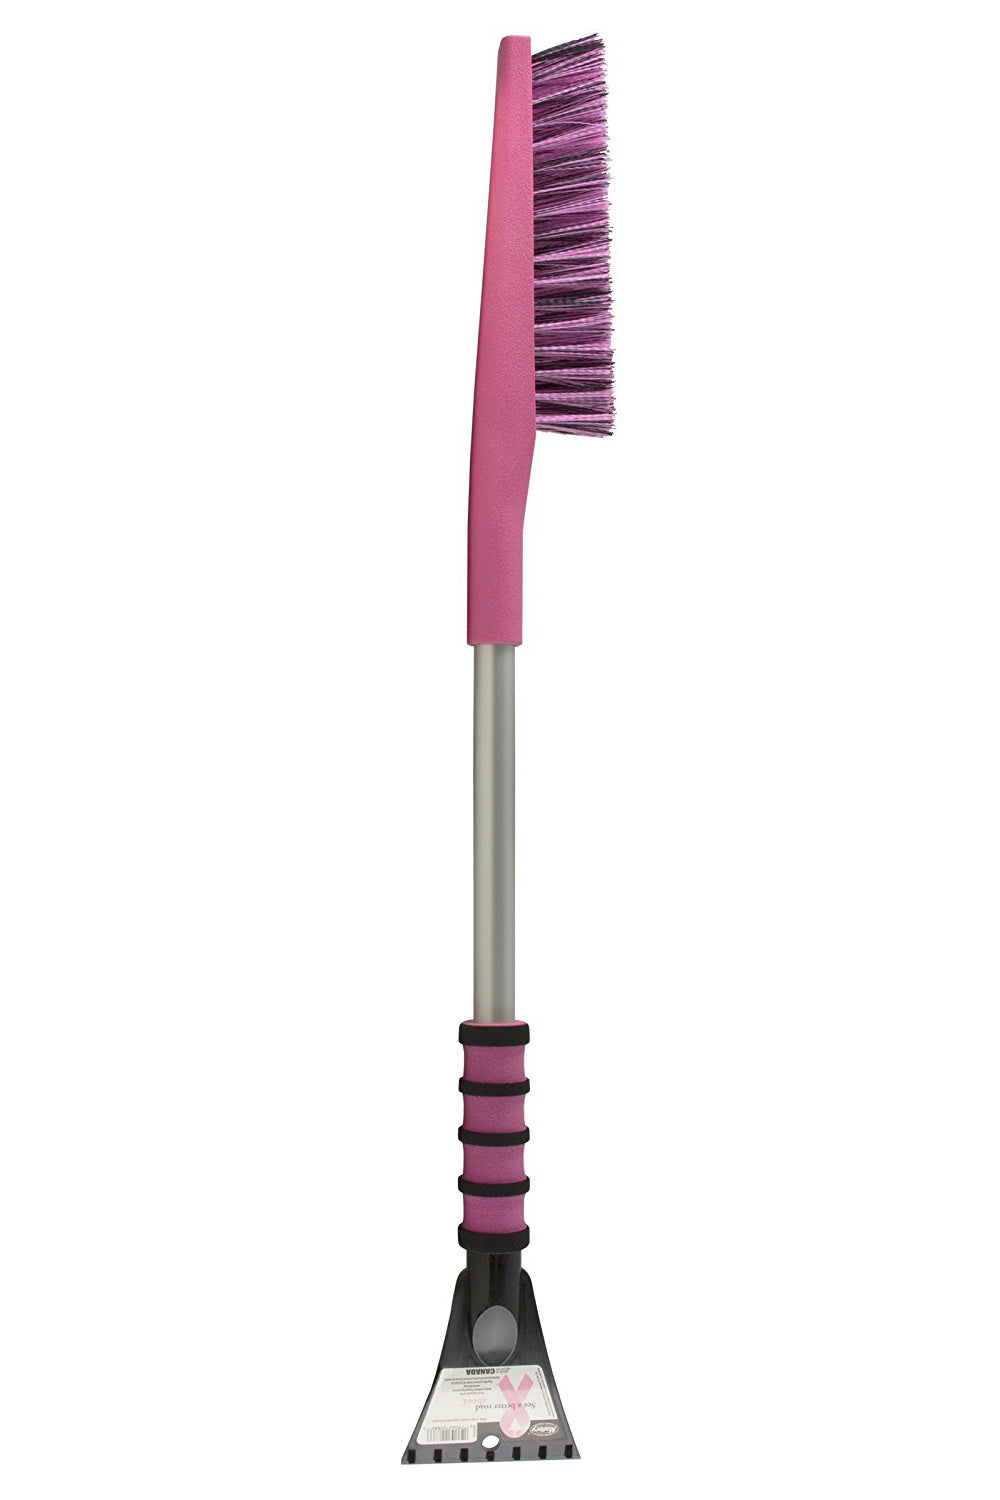 Mallory S30-886PKUS Snow Brush & Ice Scraper with Foam Grip, Pink, 31"